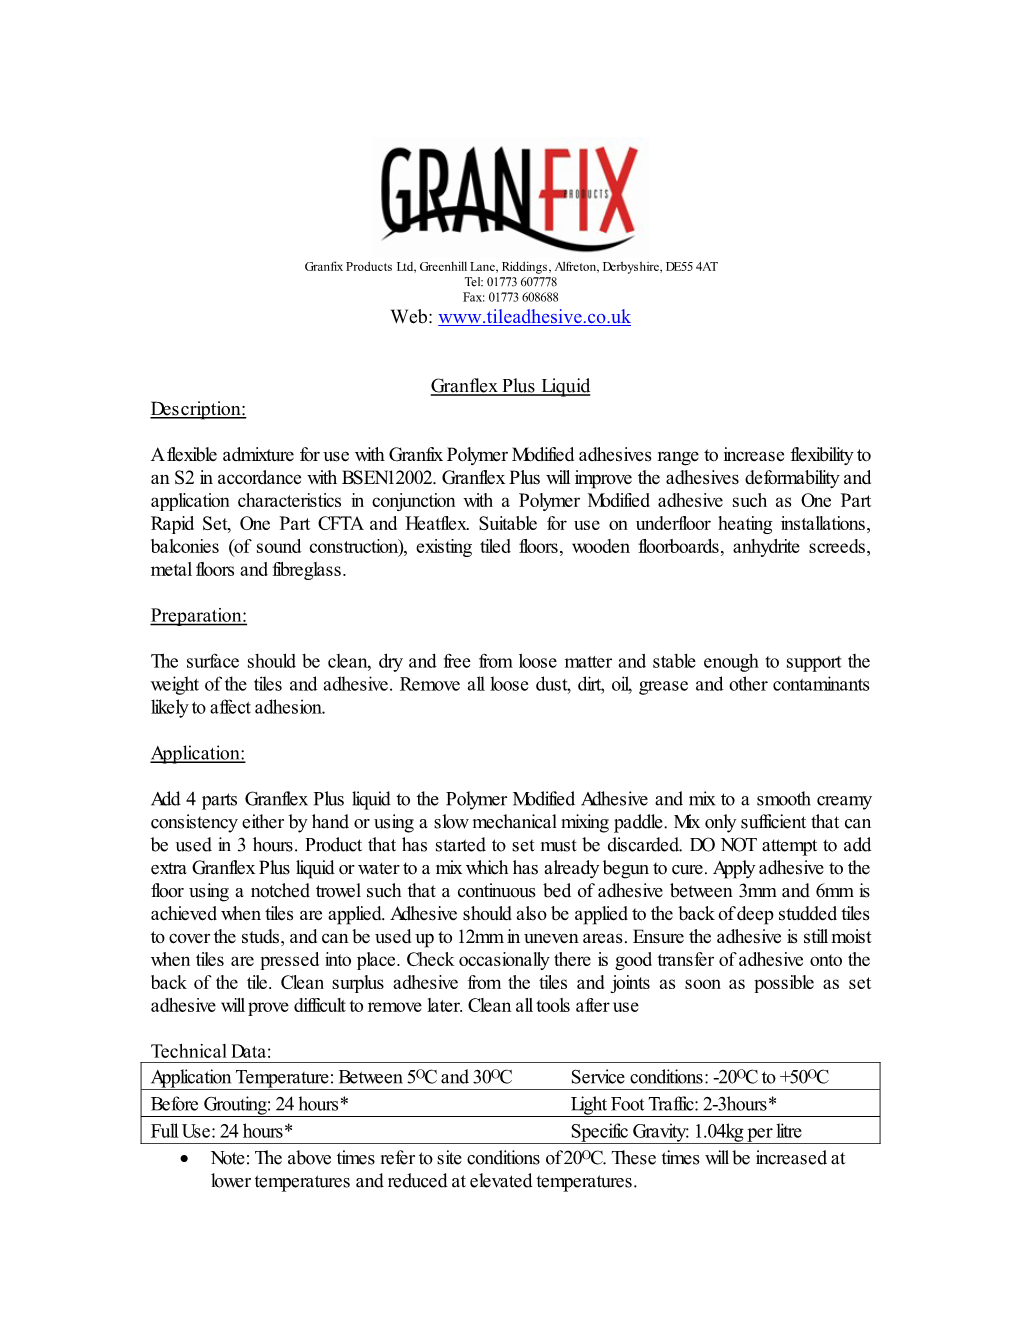 Web: Granflex Plus Liquid Description